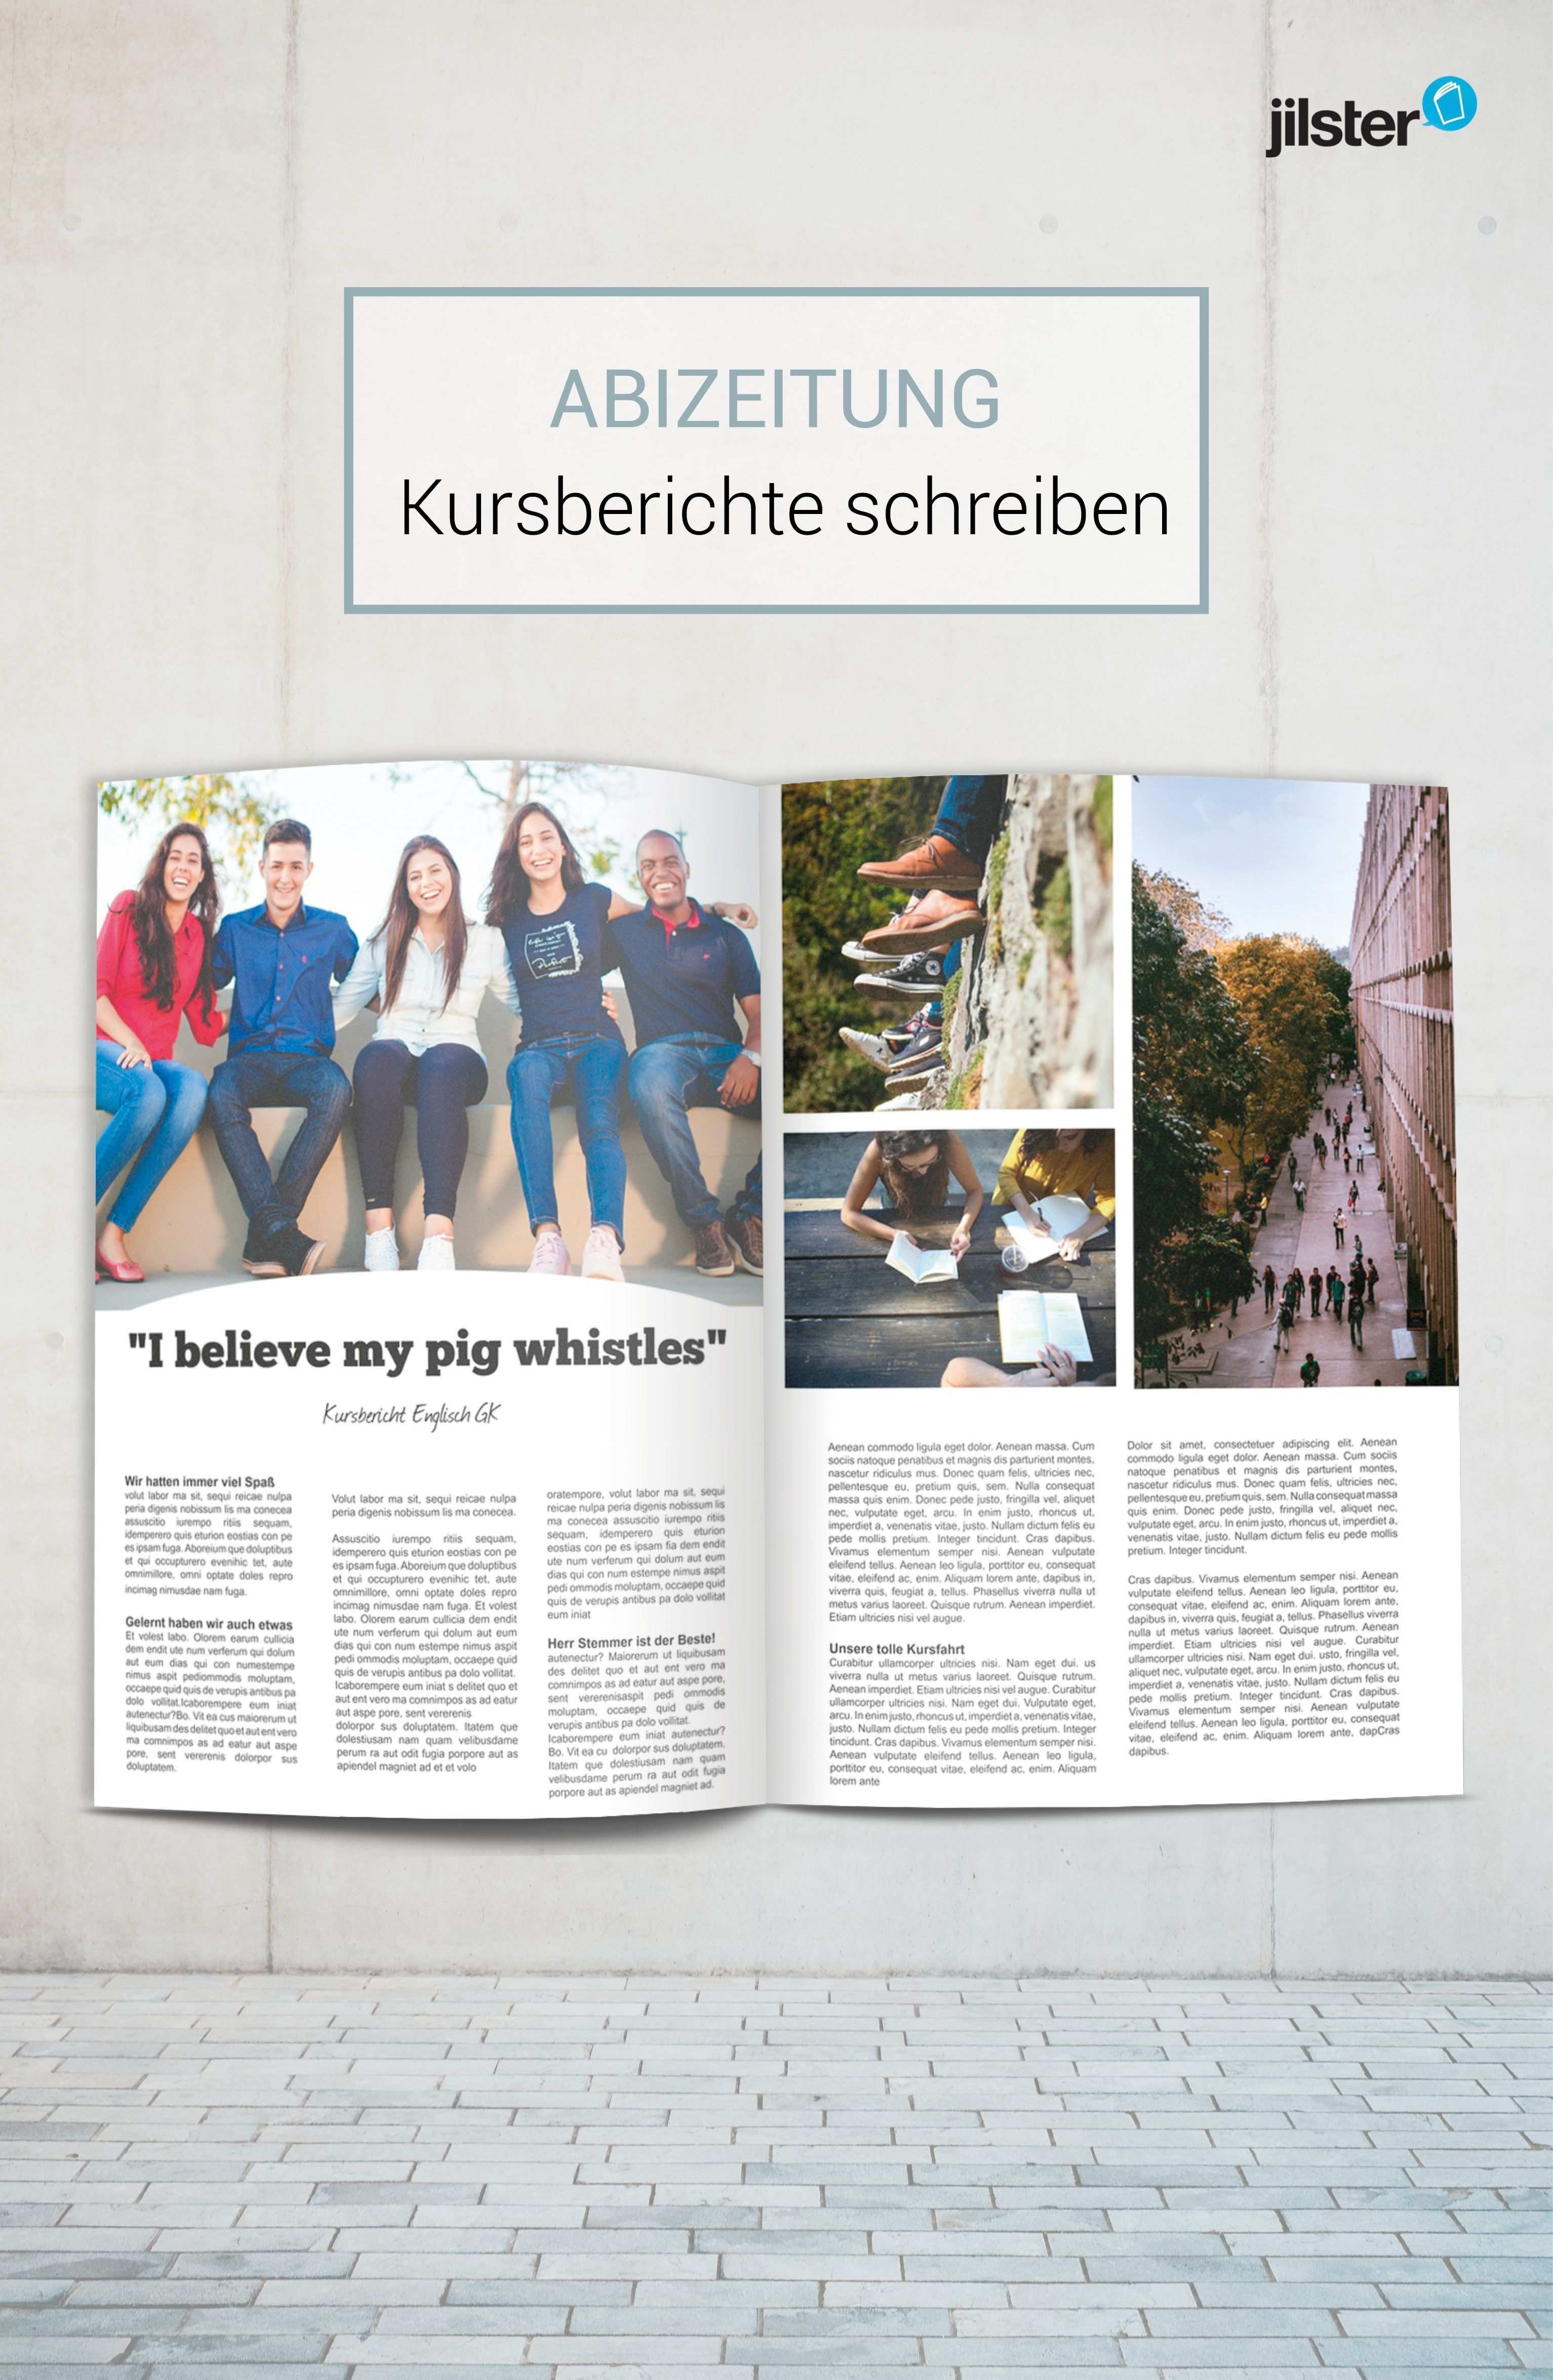 Abizeitung Kursbericht Schreiben Der Alles Ans Licht Bringt Jilster Blog Abizeitung Zeitung Schulerzeitung